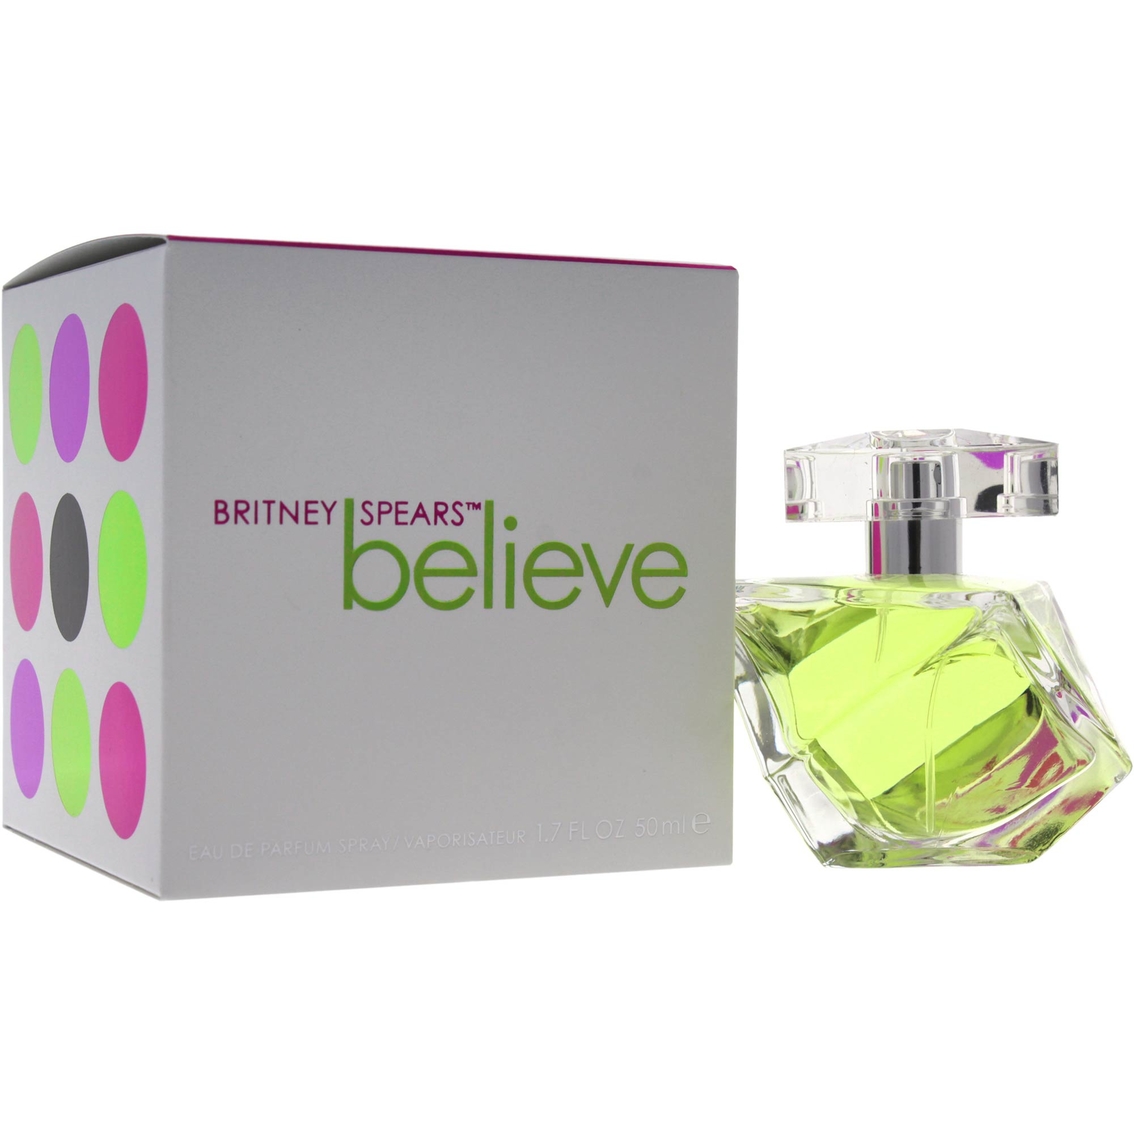 Britney Spears Believe Eau De Parfum 1.7 oz. Spray - Image 2 of 2